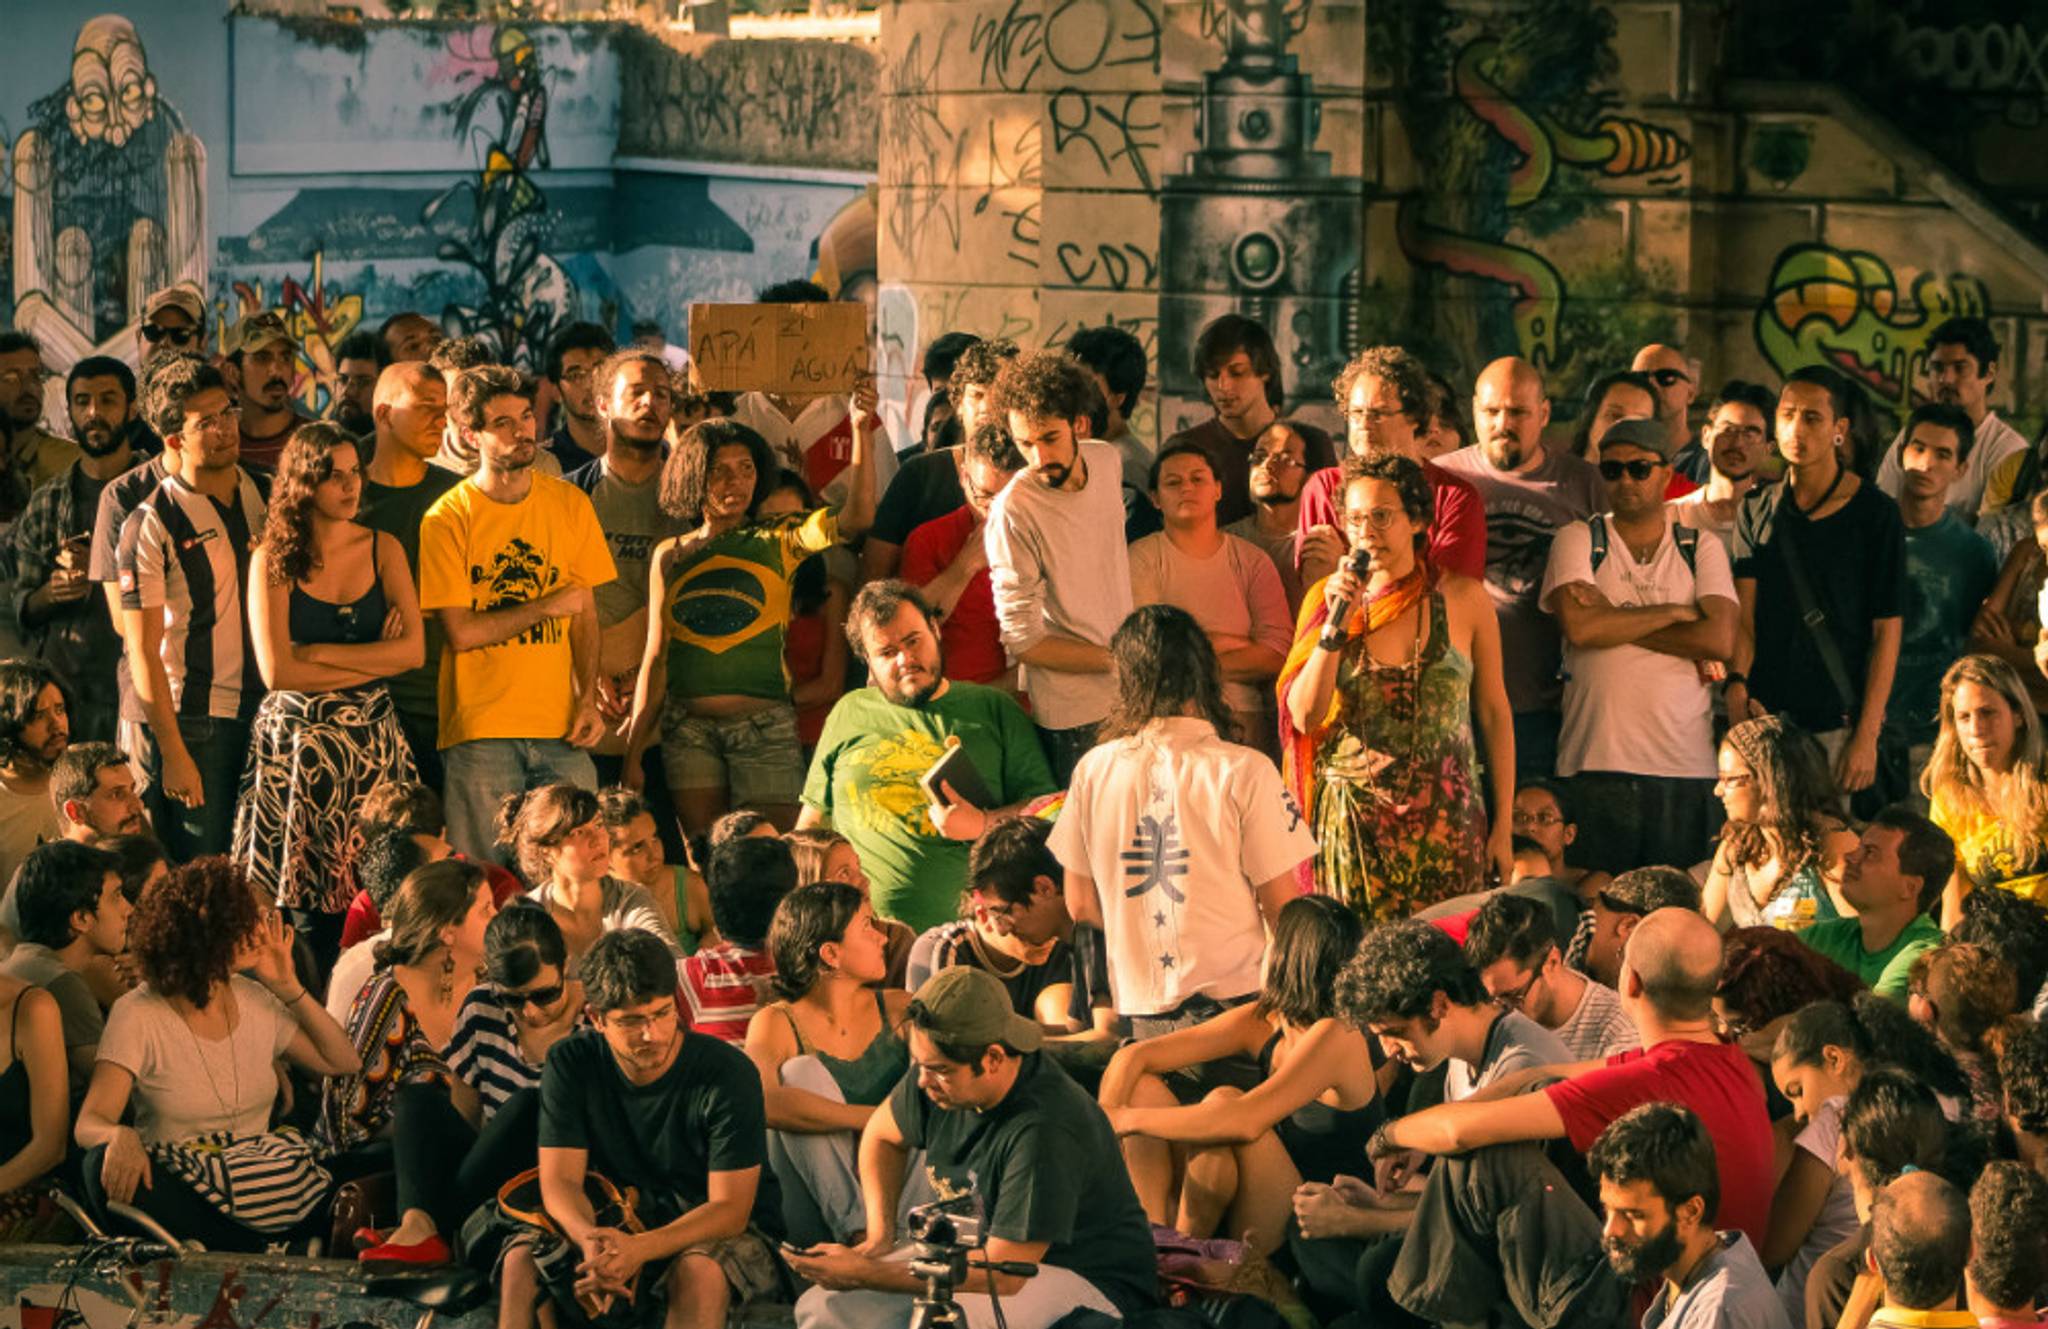 Brazilians lose trust in social media for organising